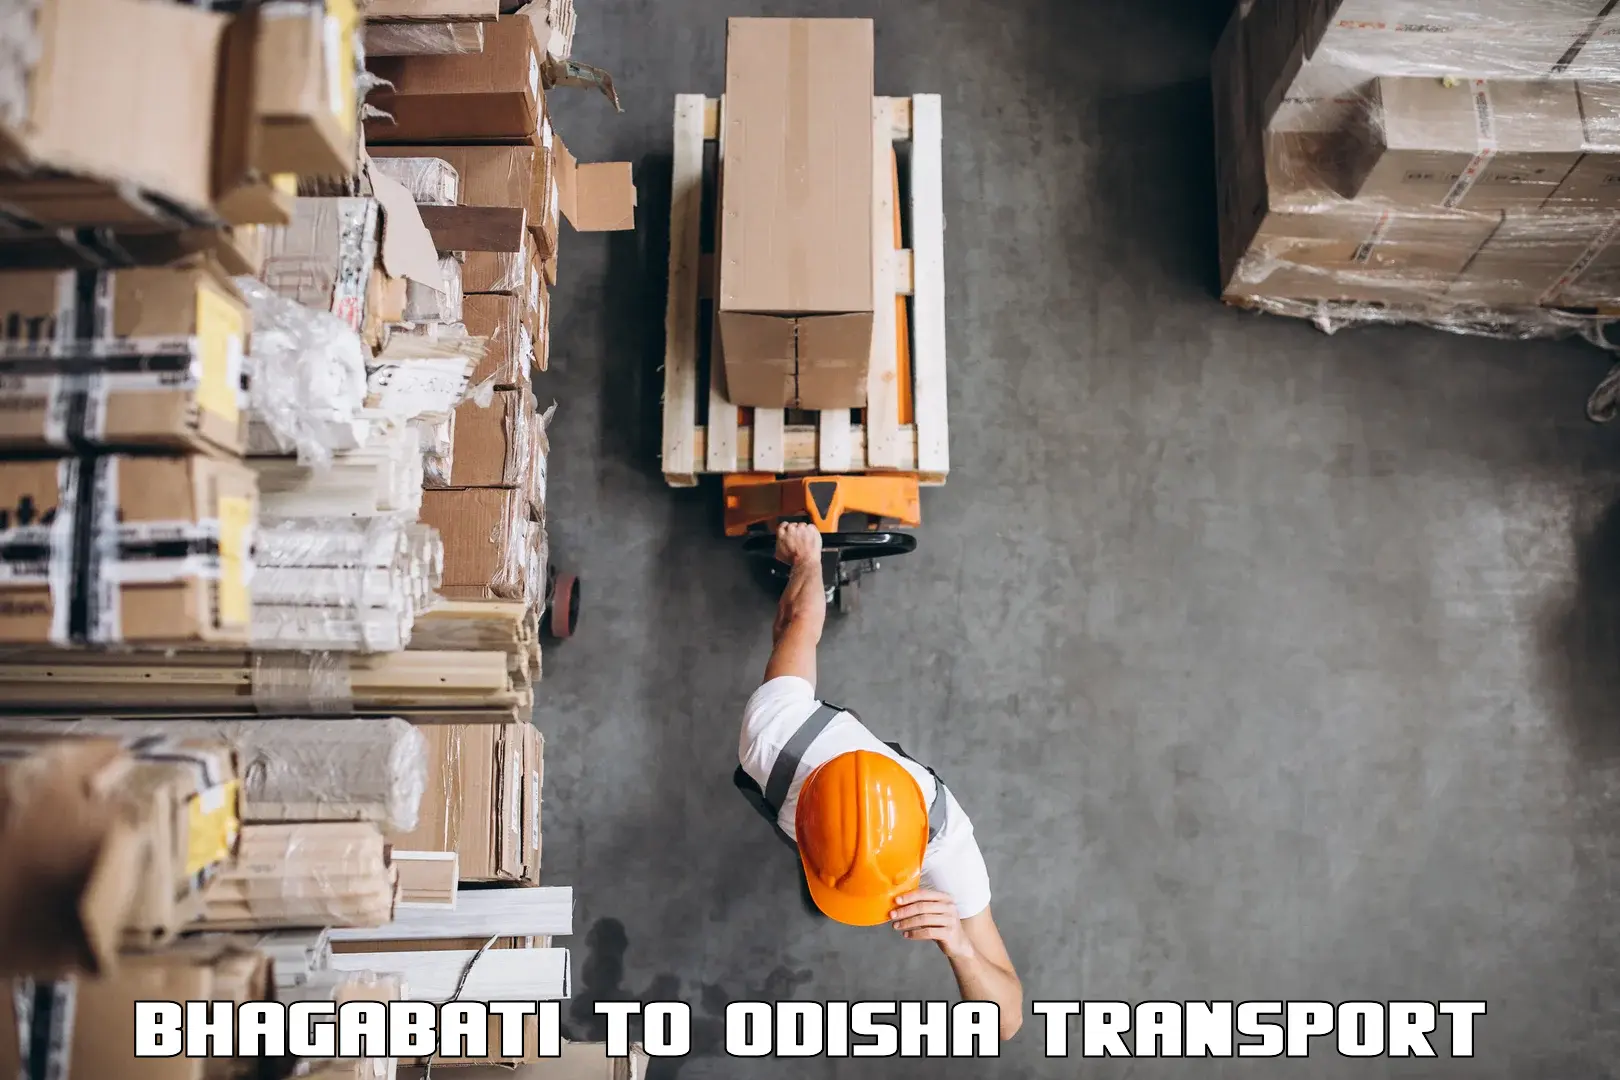 Delivery service Bhagabati to Komana